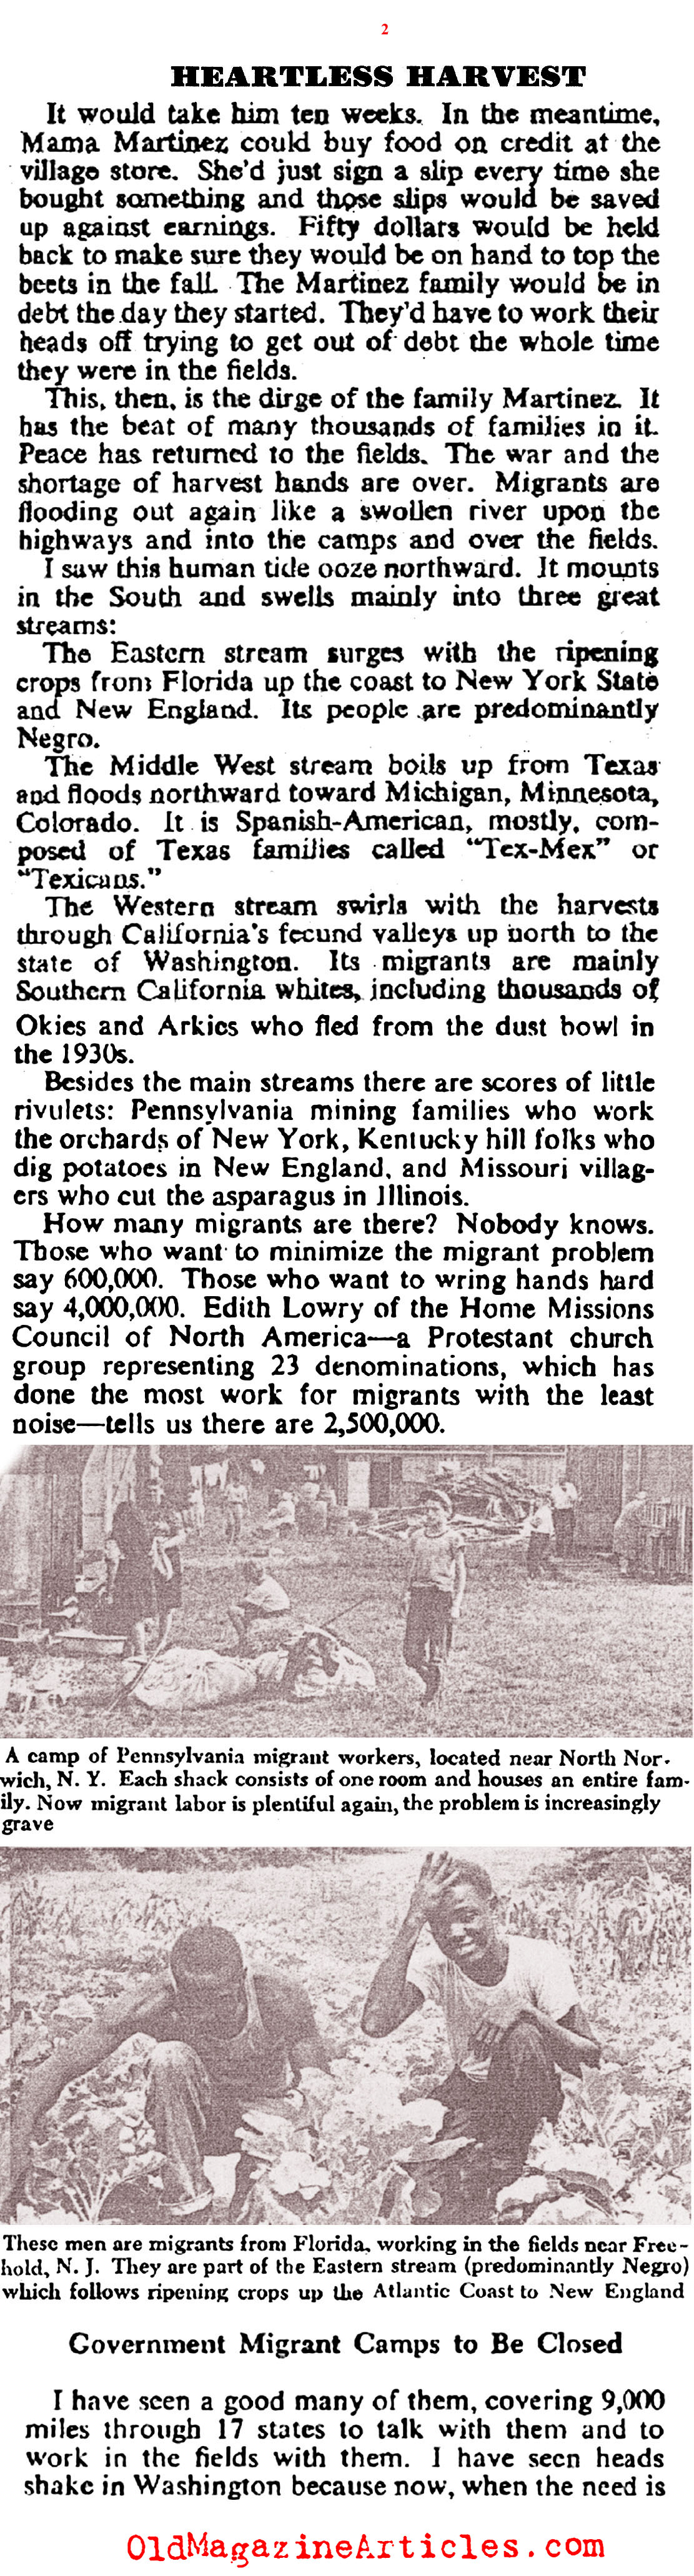 Exploited Farm Labor During World War II (Collier's Magazine, 1947)